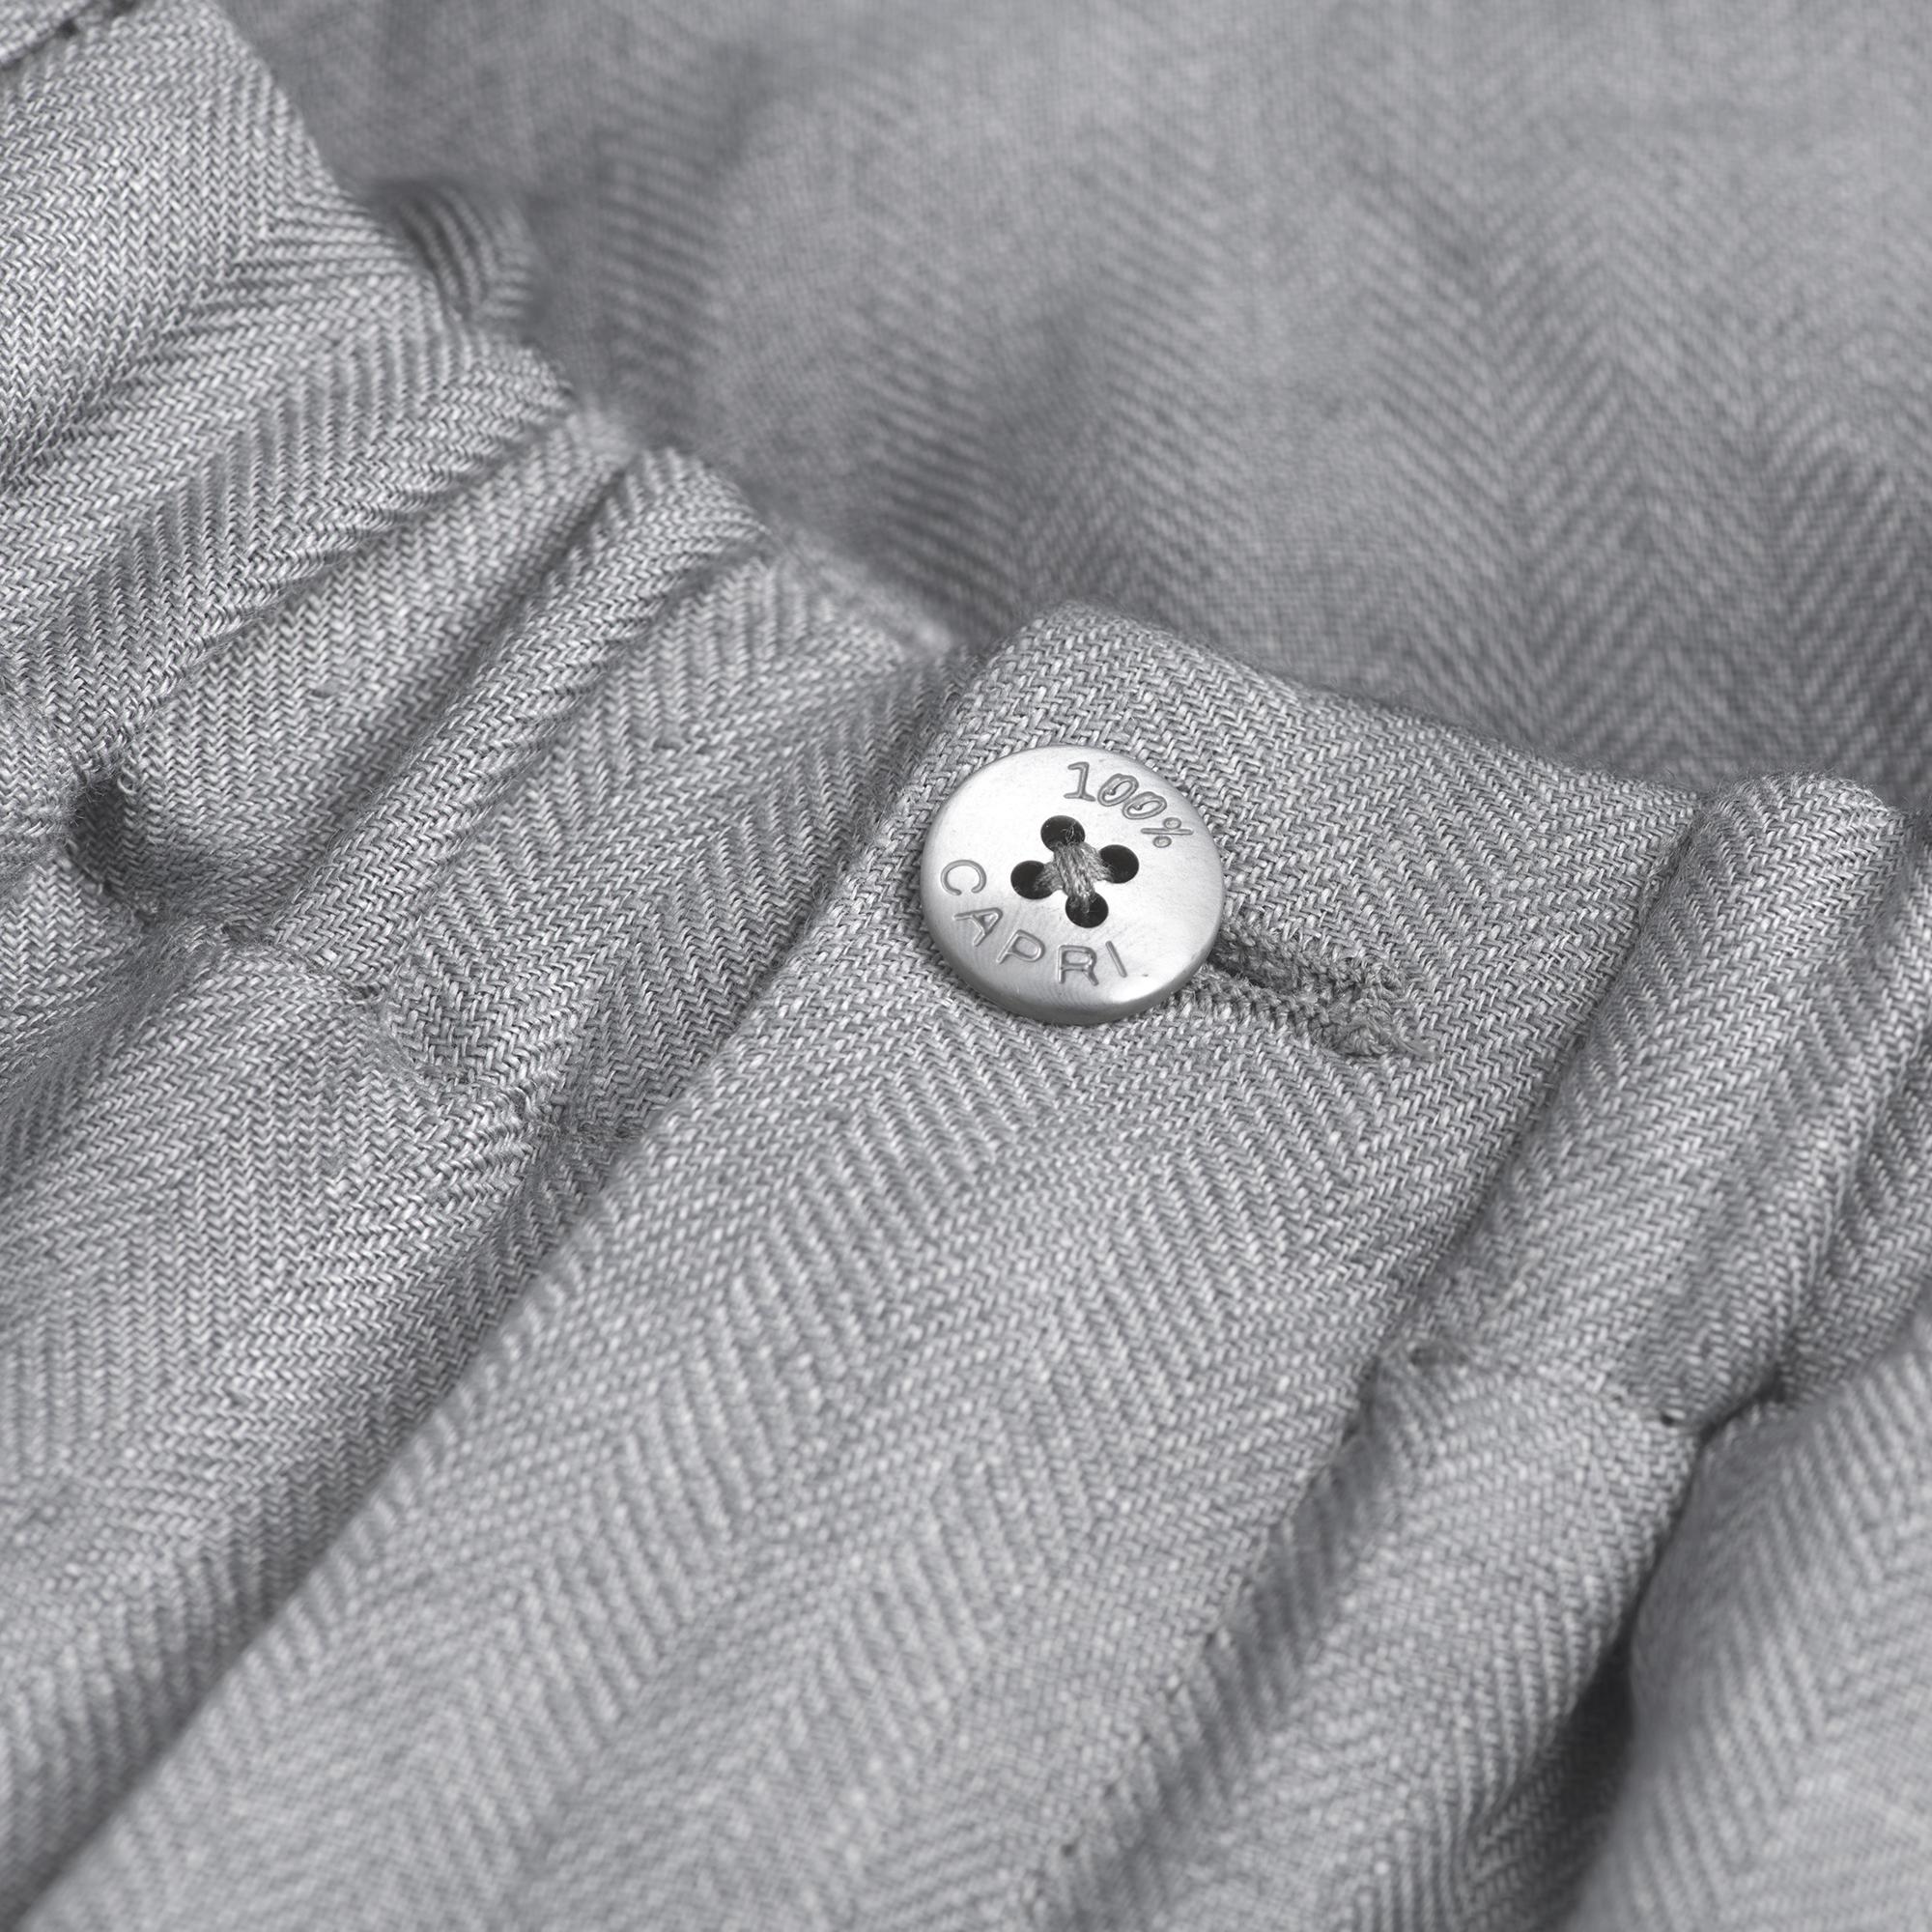 Pantalone Positano 100% Capri light grey linen trouser detail